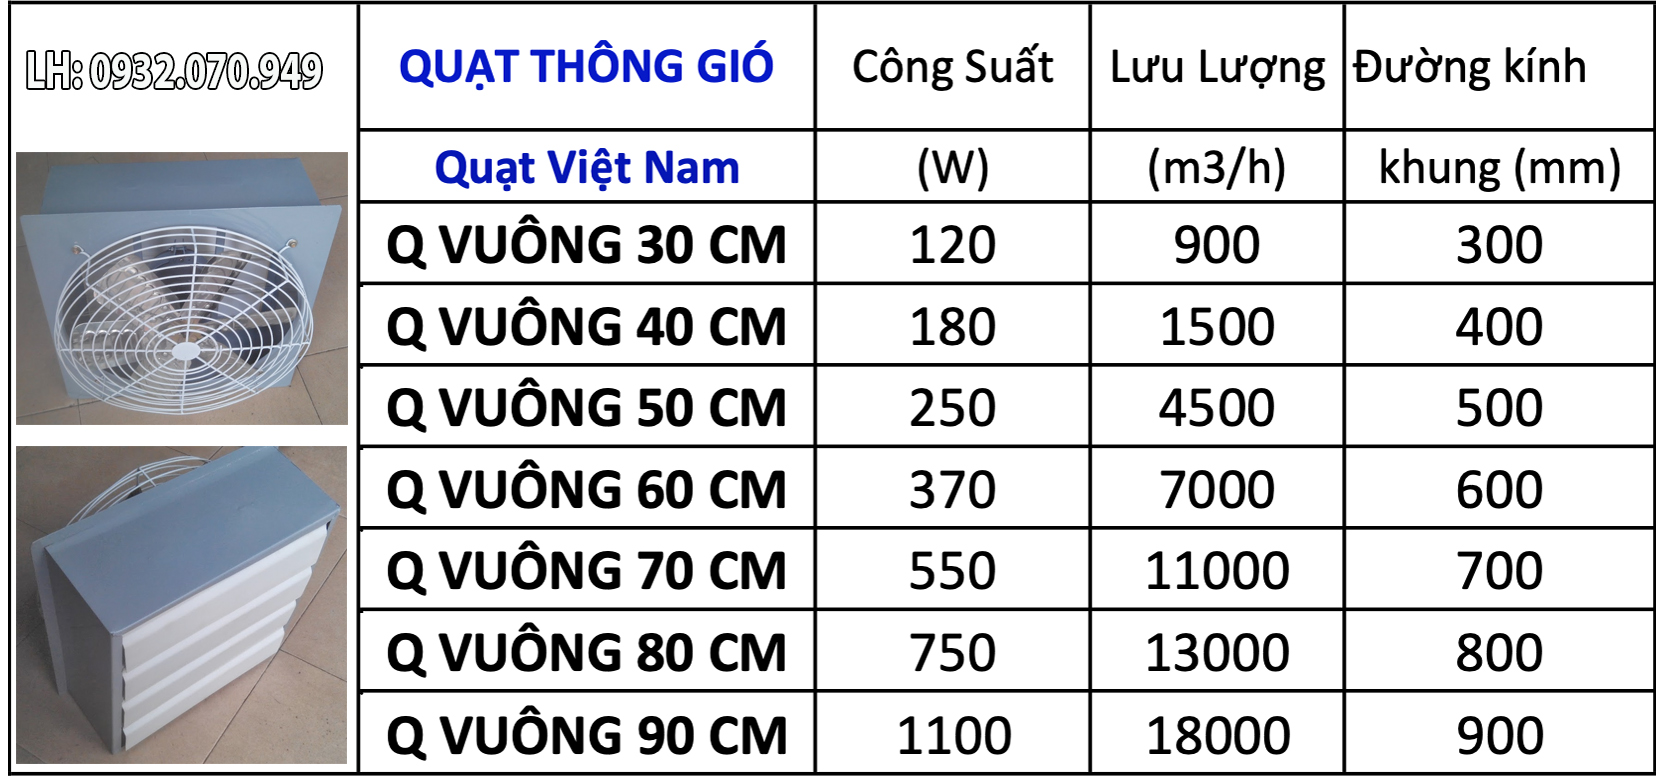 quat_thong_gio_nha_xuong_viet_nam_900